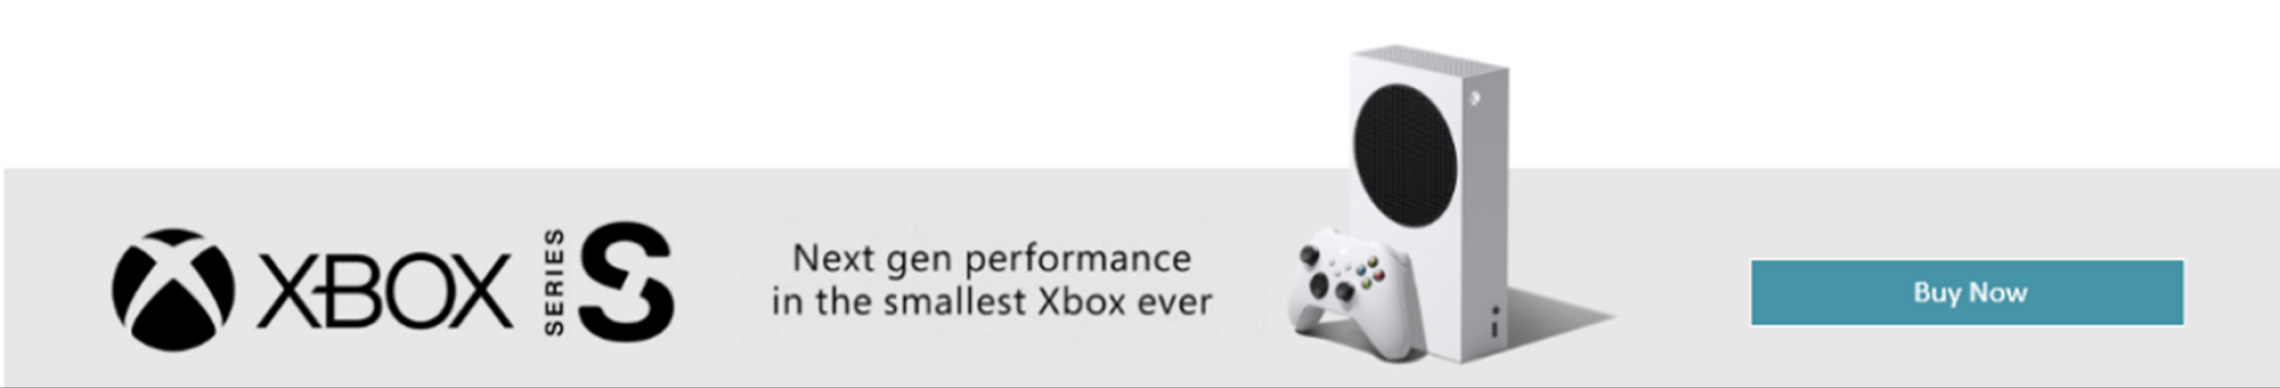 Xbox S banner